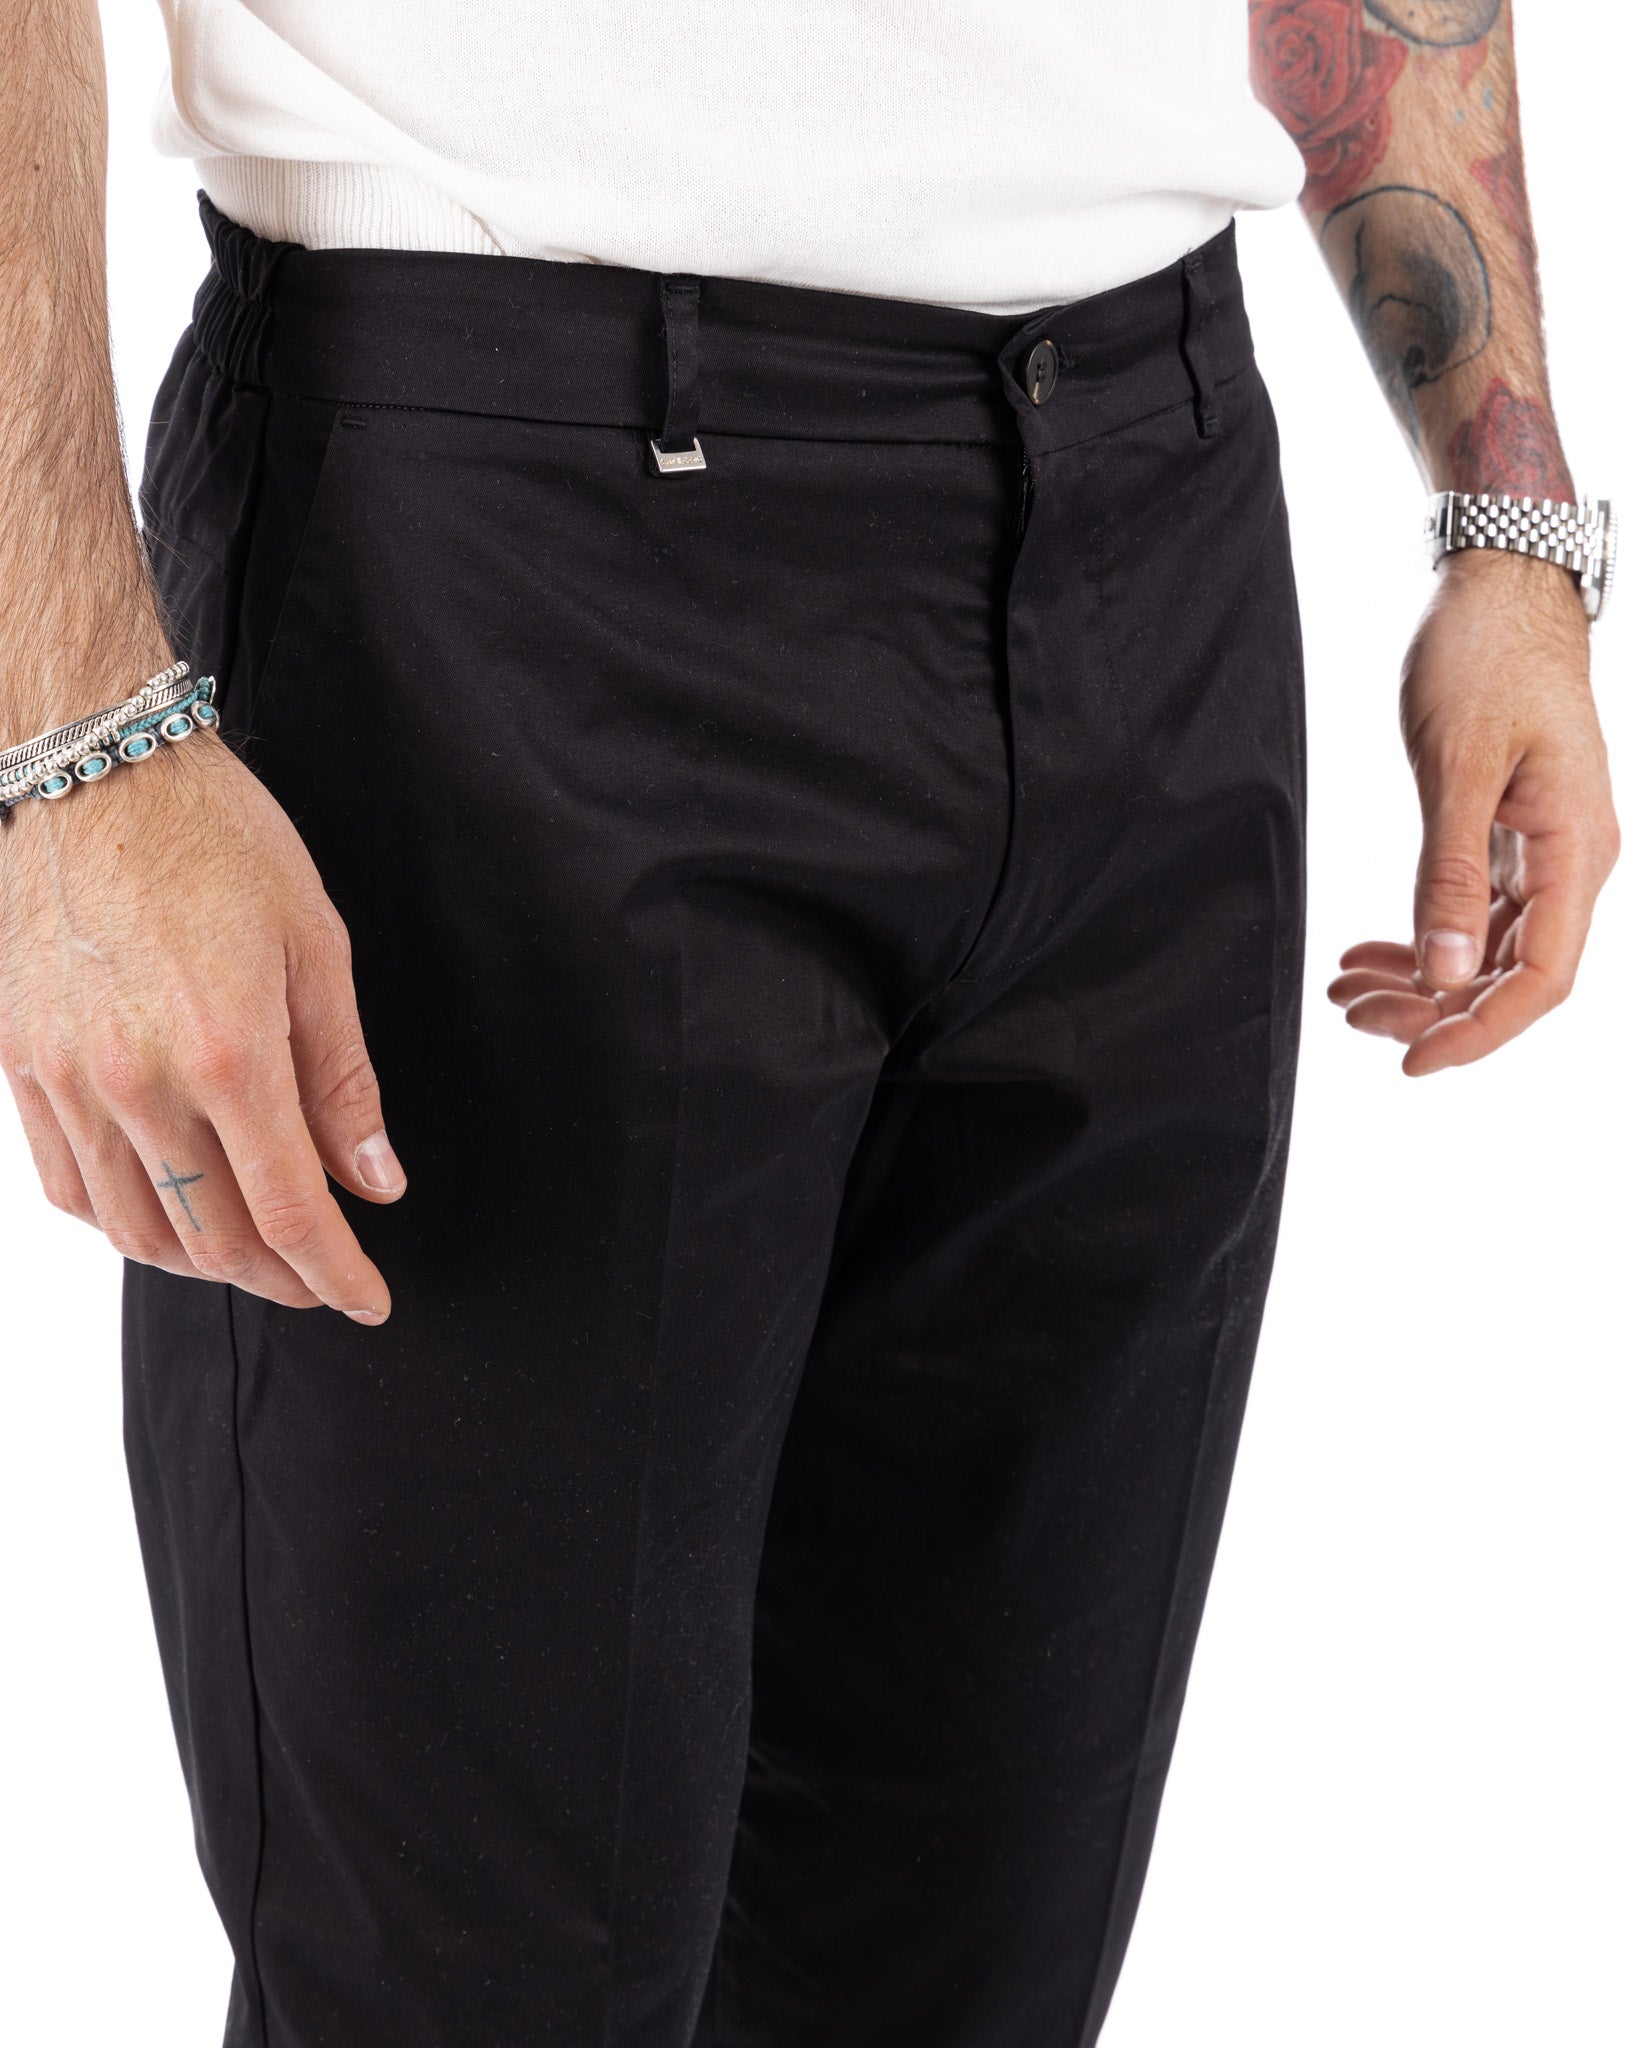 Elder - pantalone capri nero in cotone